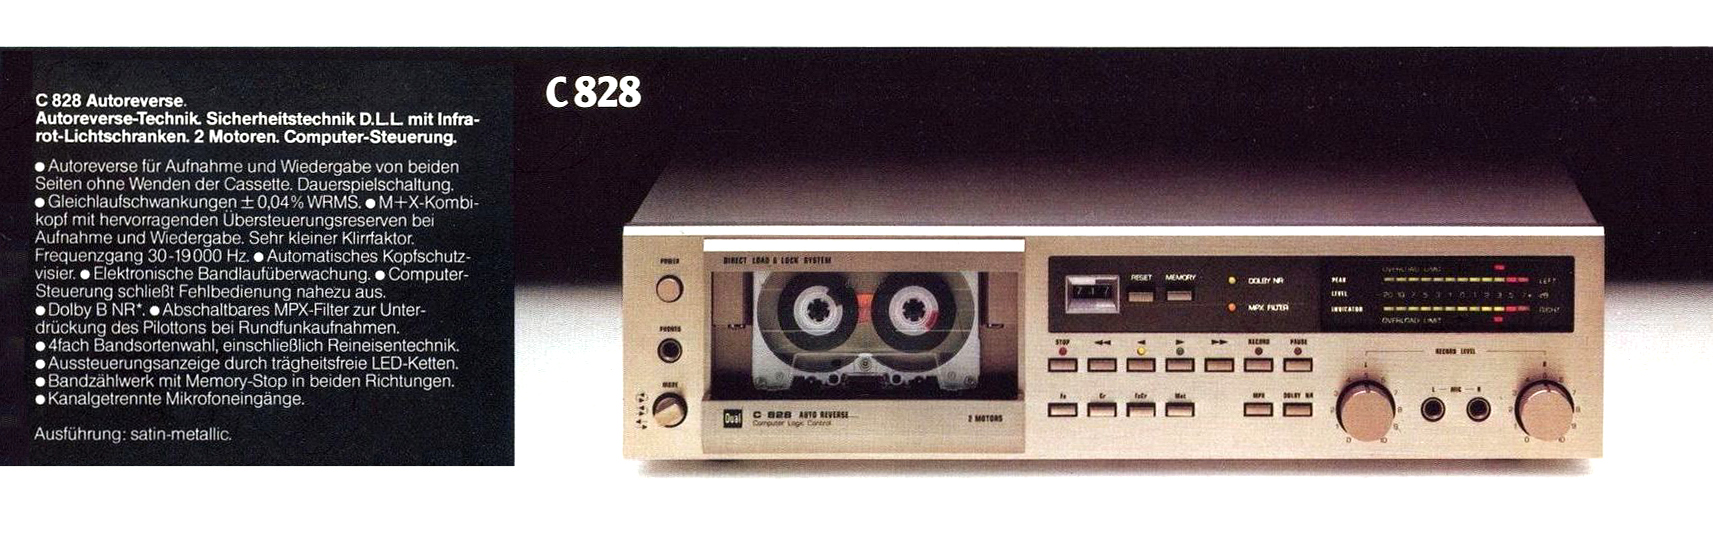 Dual C-828-Prospekt-1983.jpg